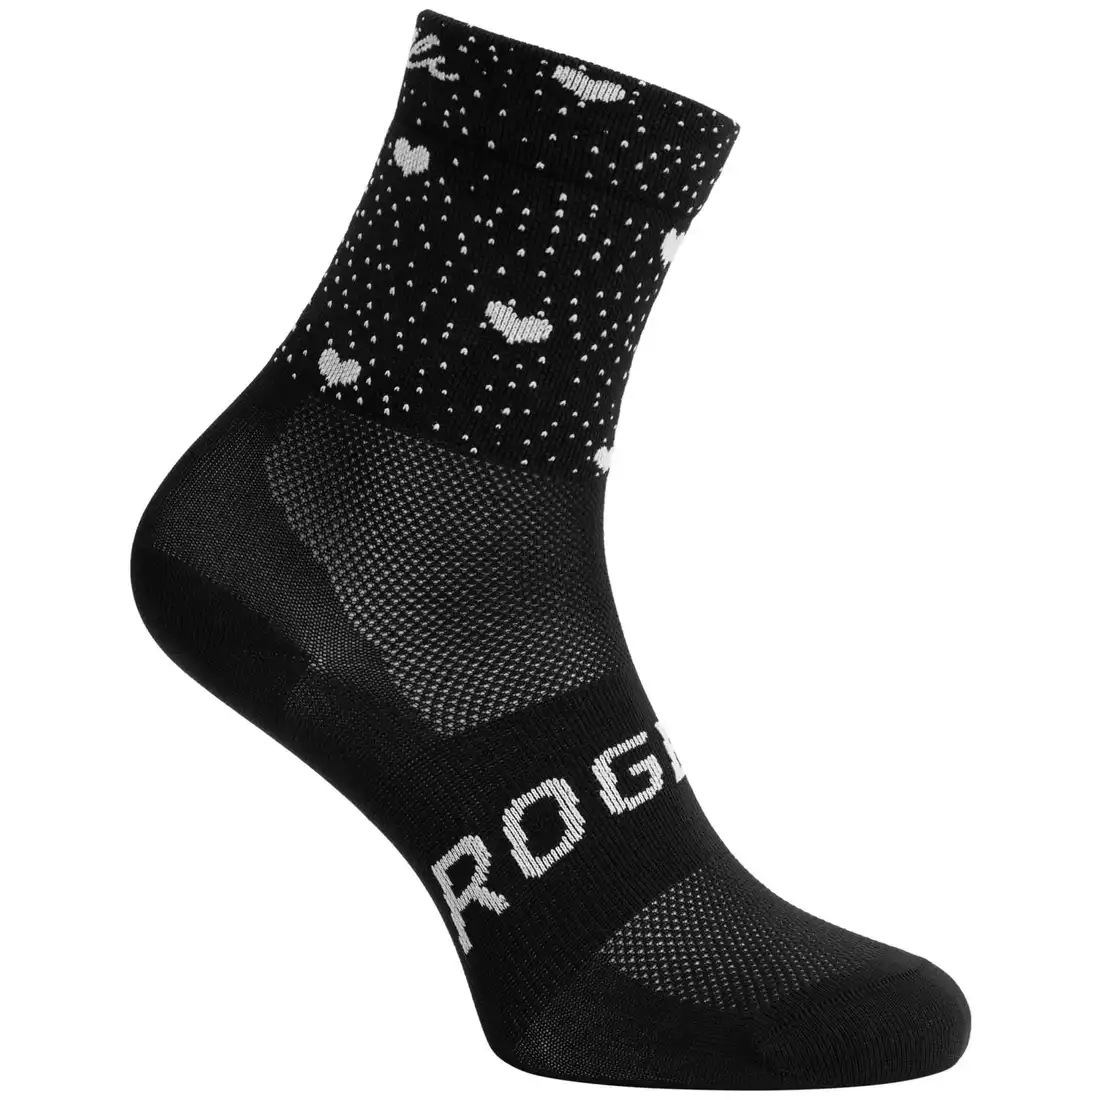 ROGELLI HEARTS Women's sports socks, kaštanové